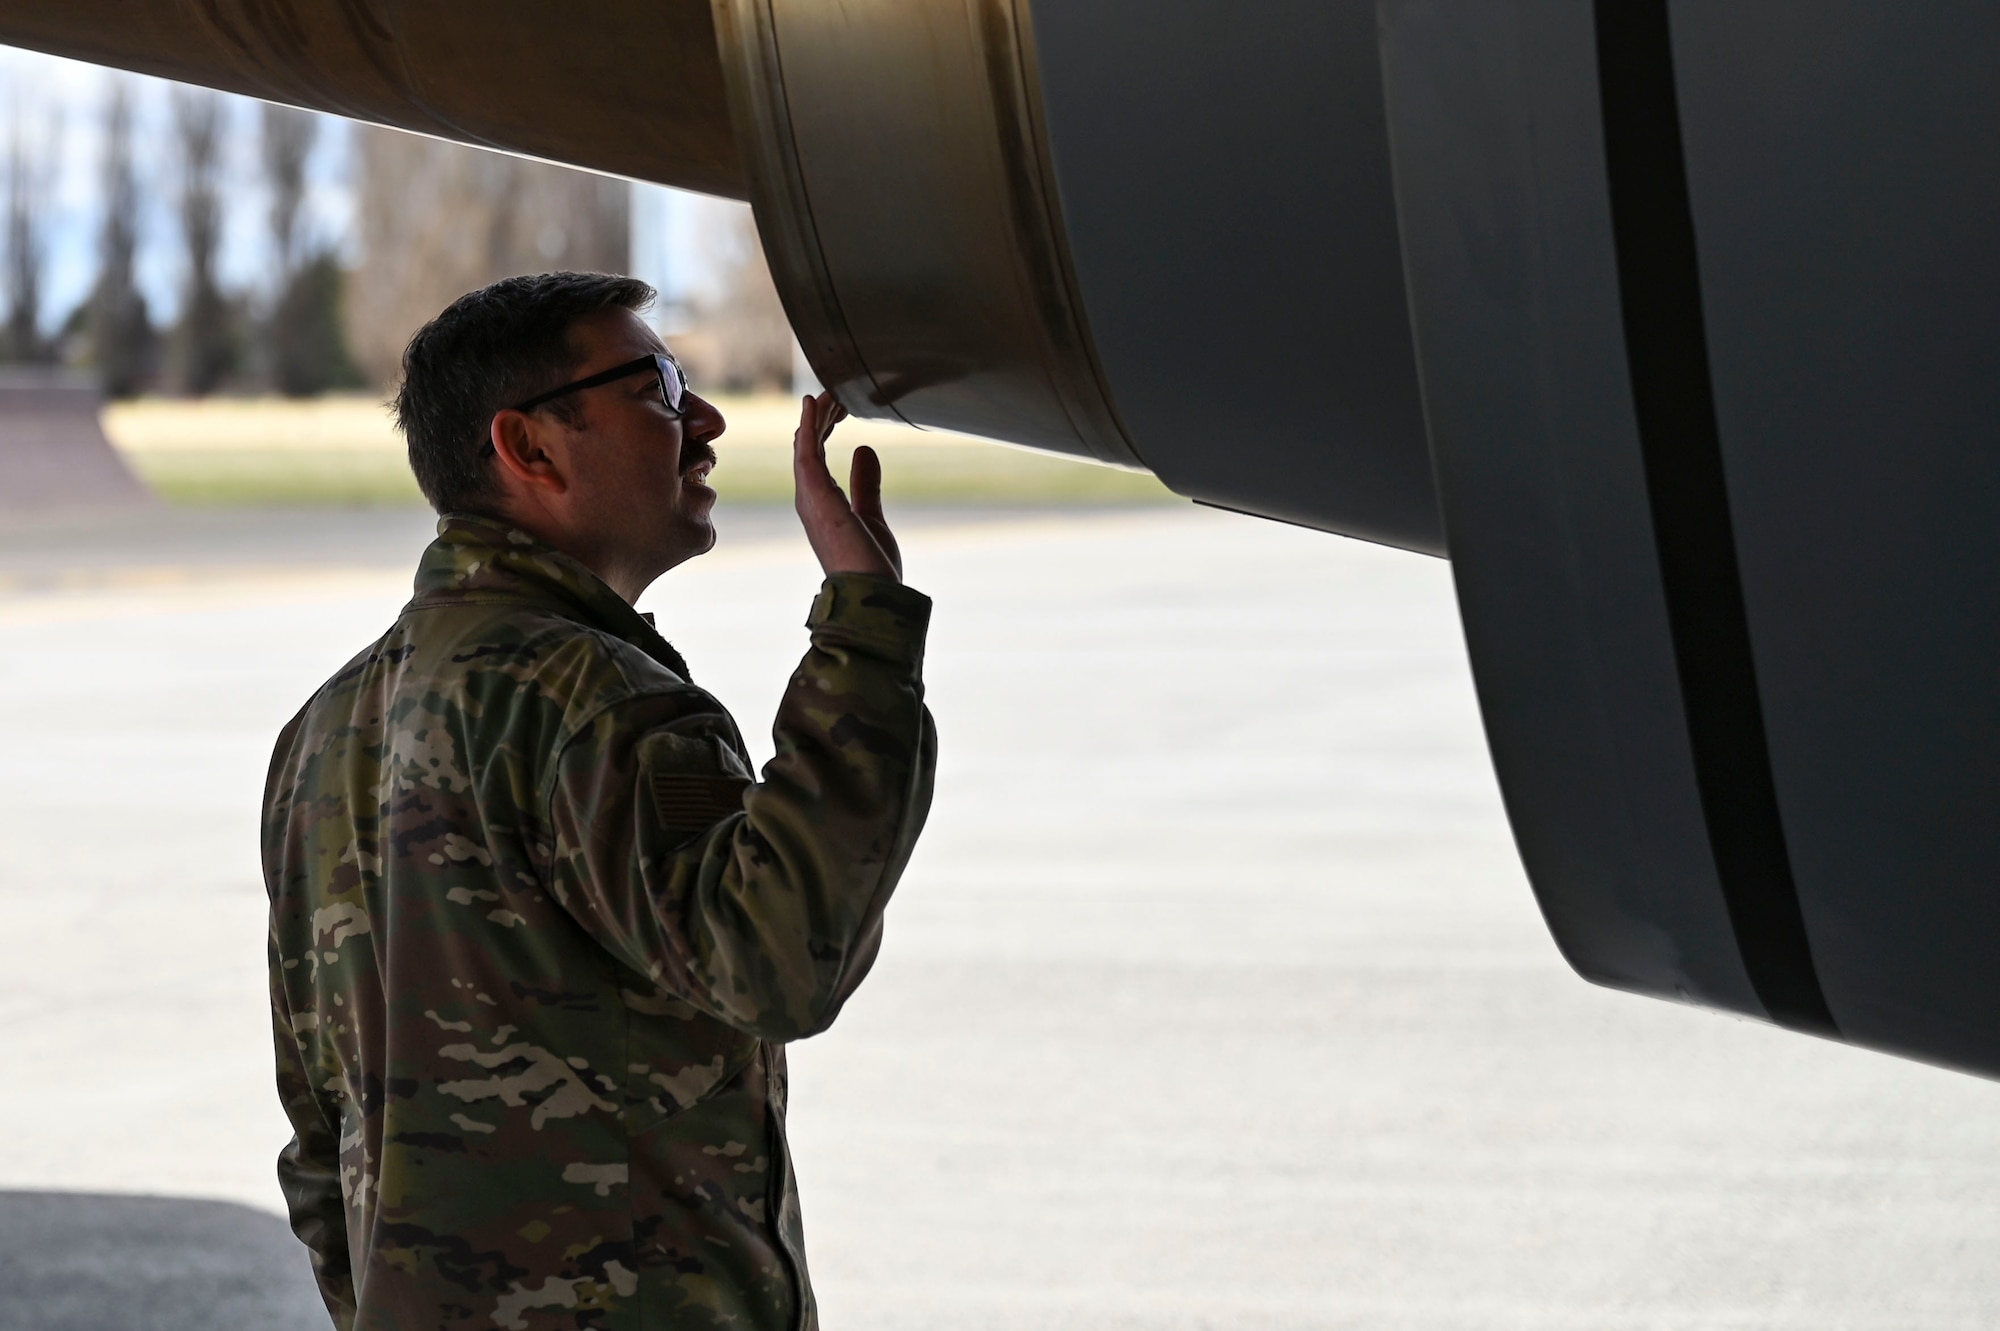 Airman inspects aircraft